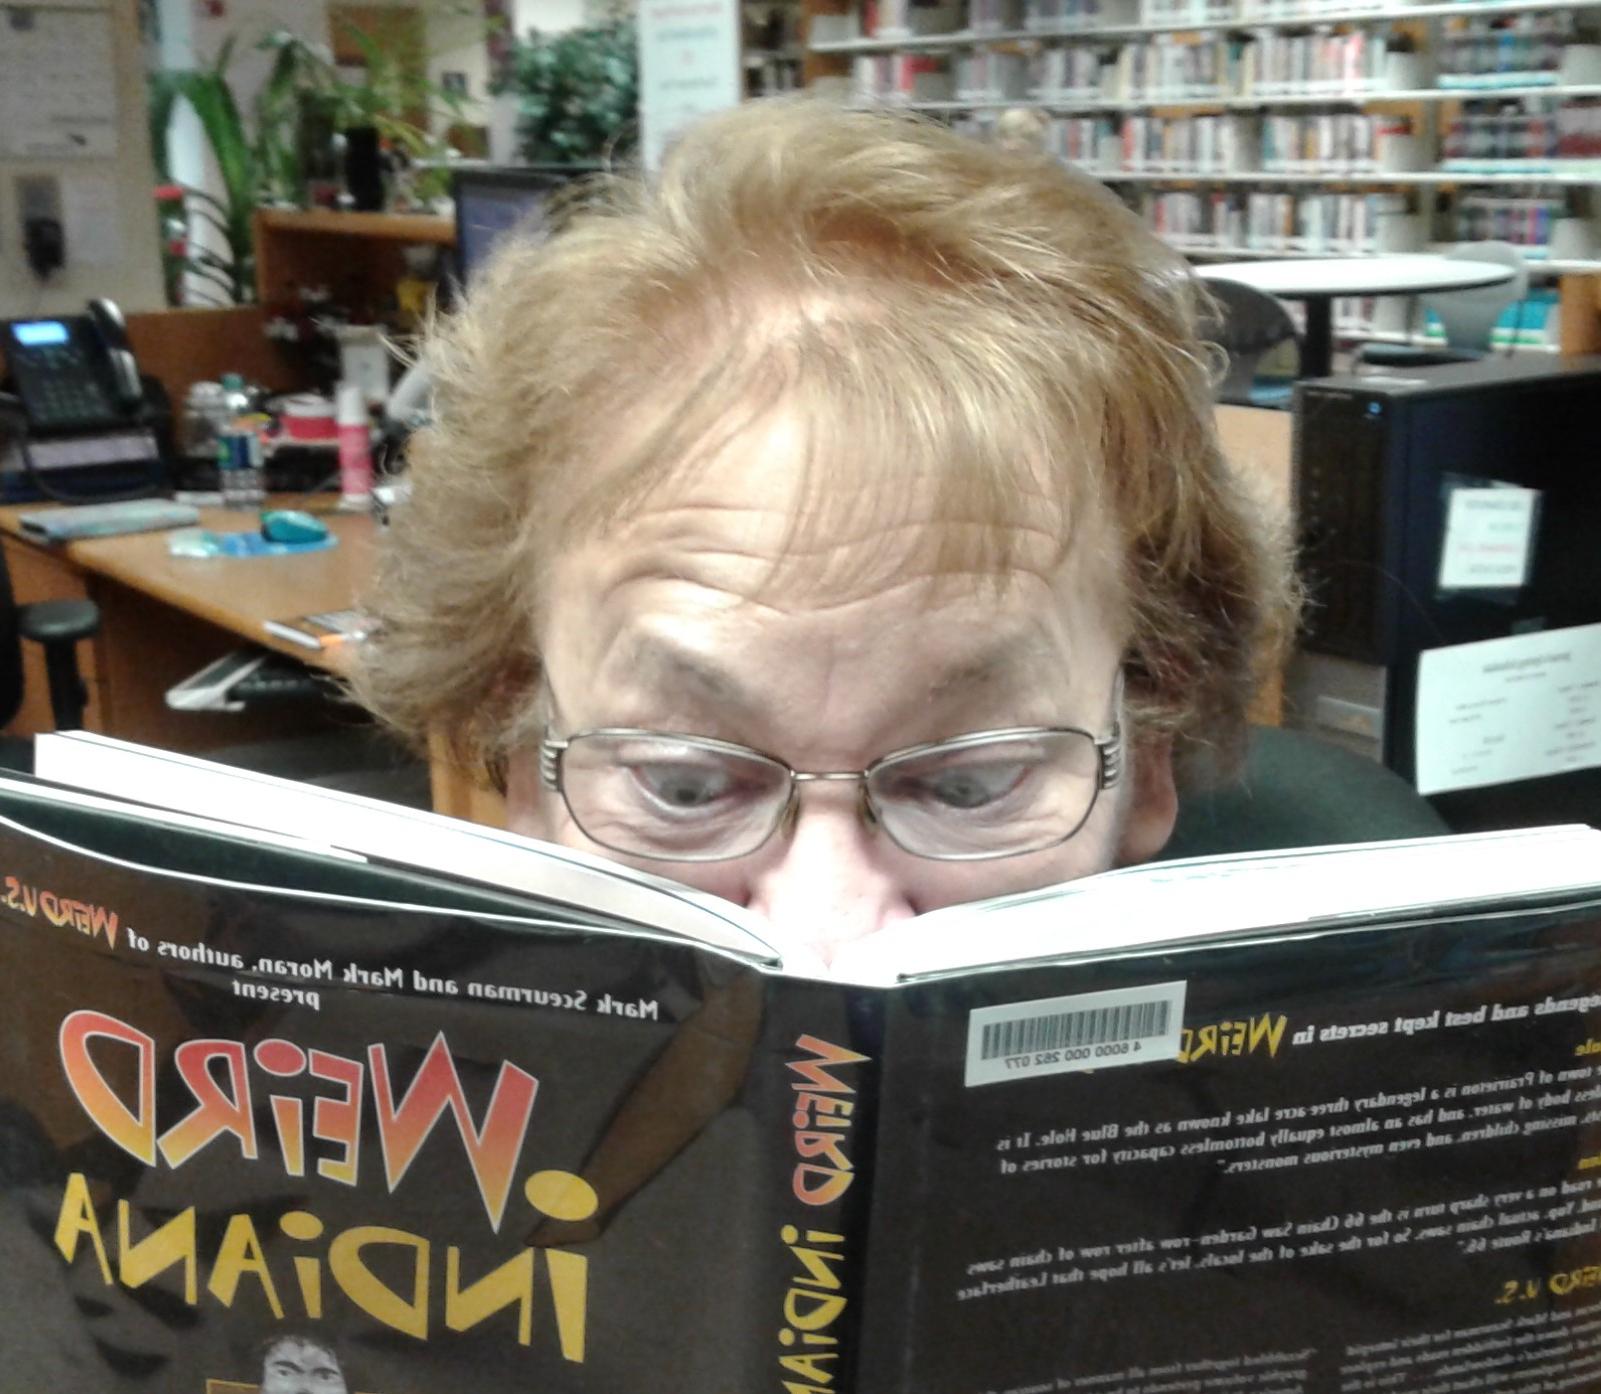 A librarian looking through the Weird Indiana book